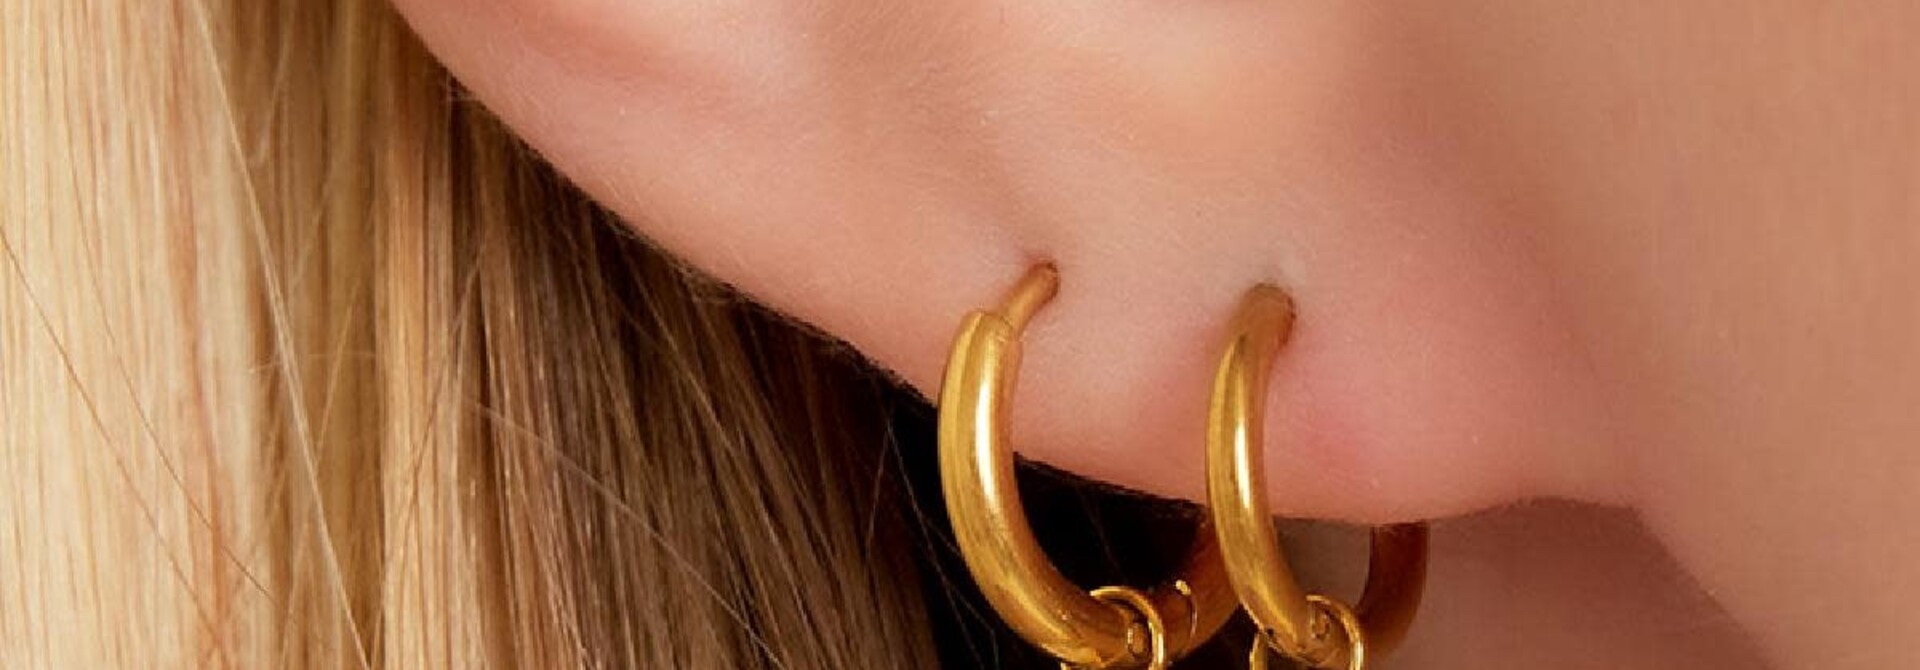 Smiley earrings Gold